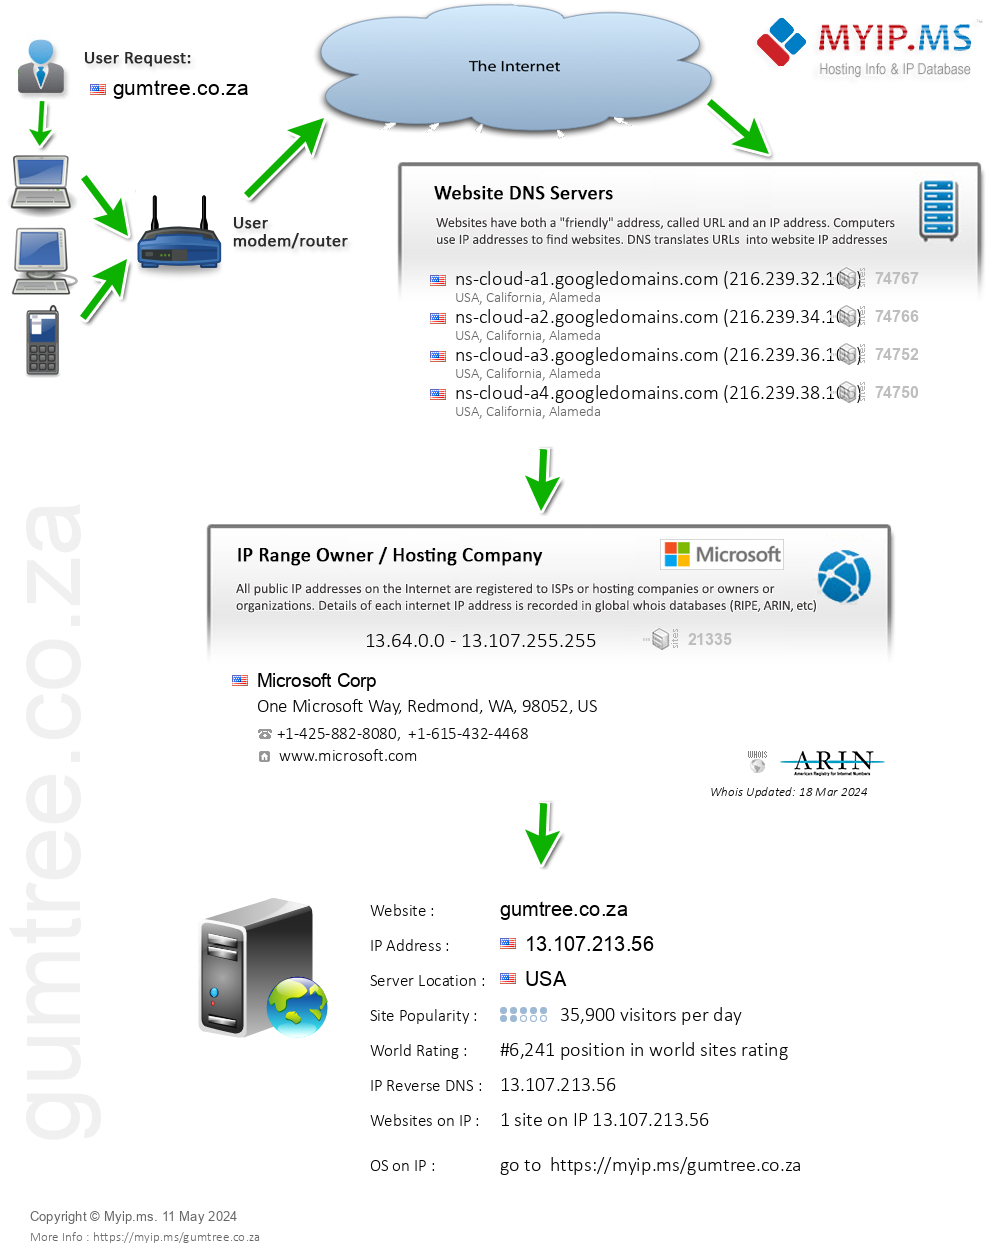 Gumtree.co.za - Website Hosting Visual IP Diagram